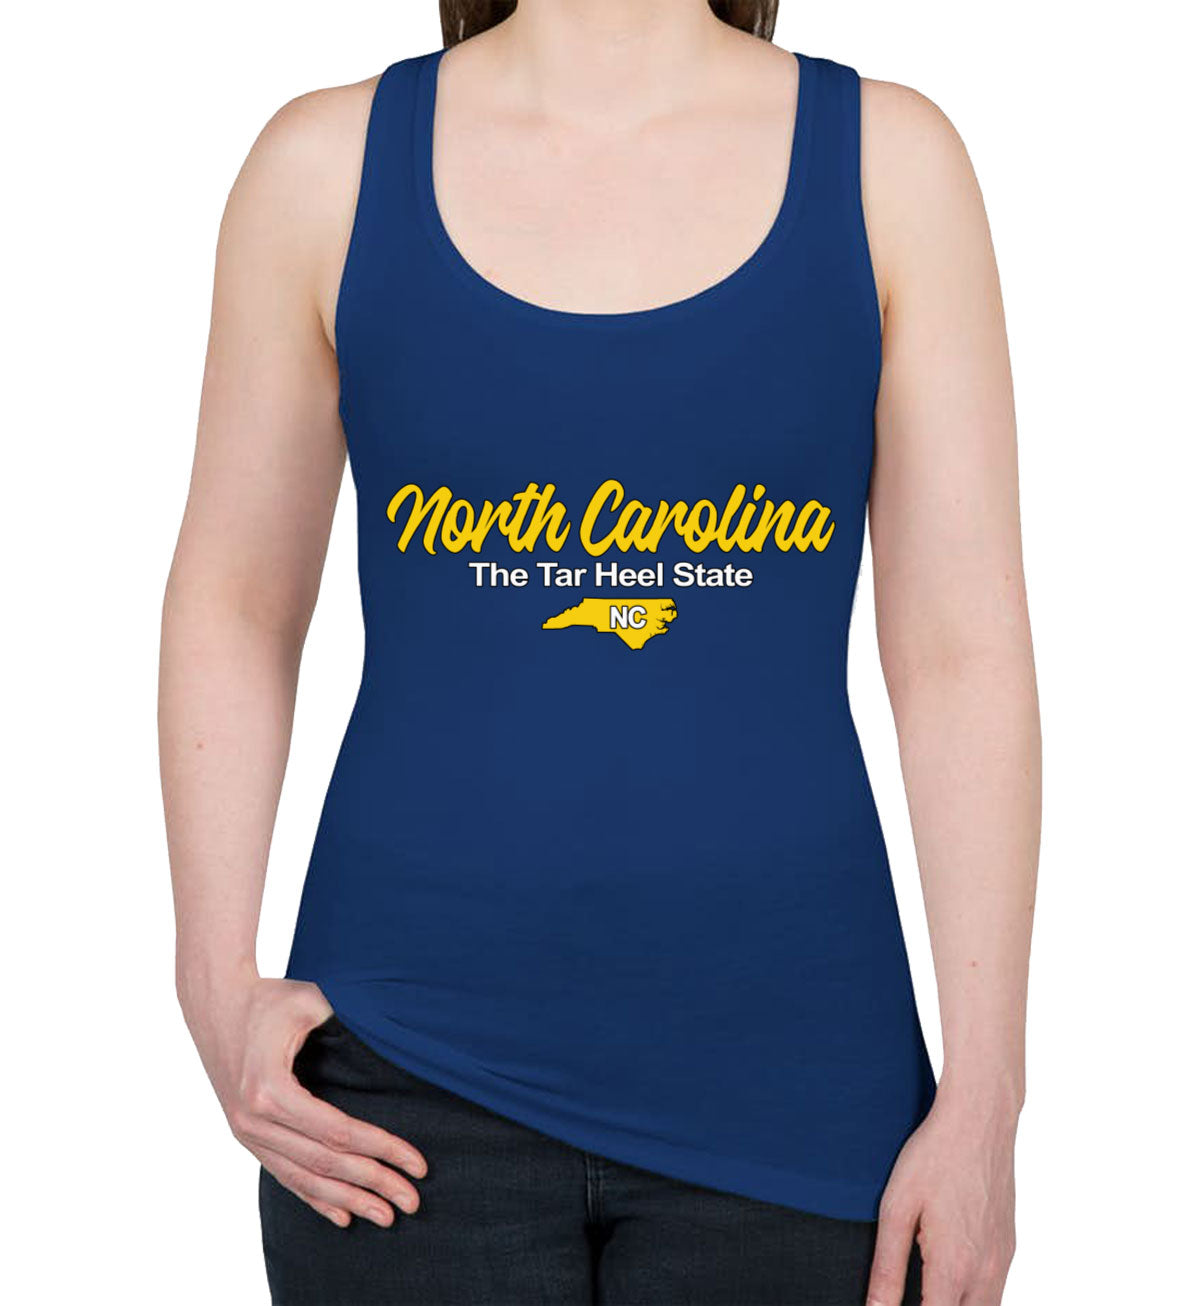 North Carolina The Tar Heel State Women's Racerback Tank Top